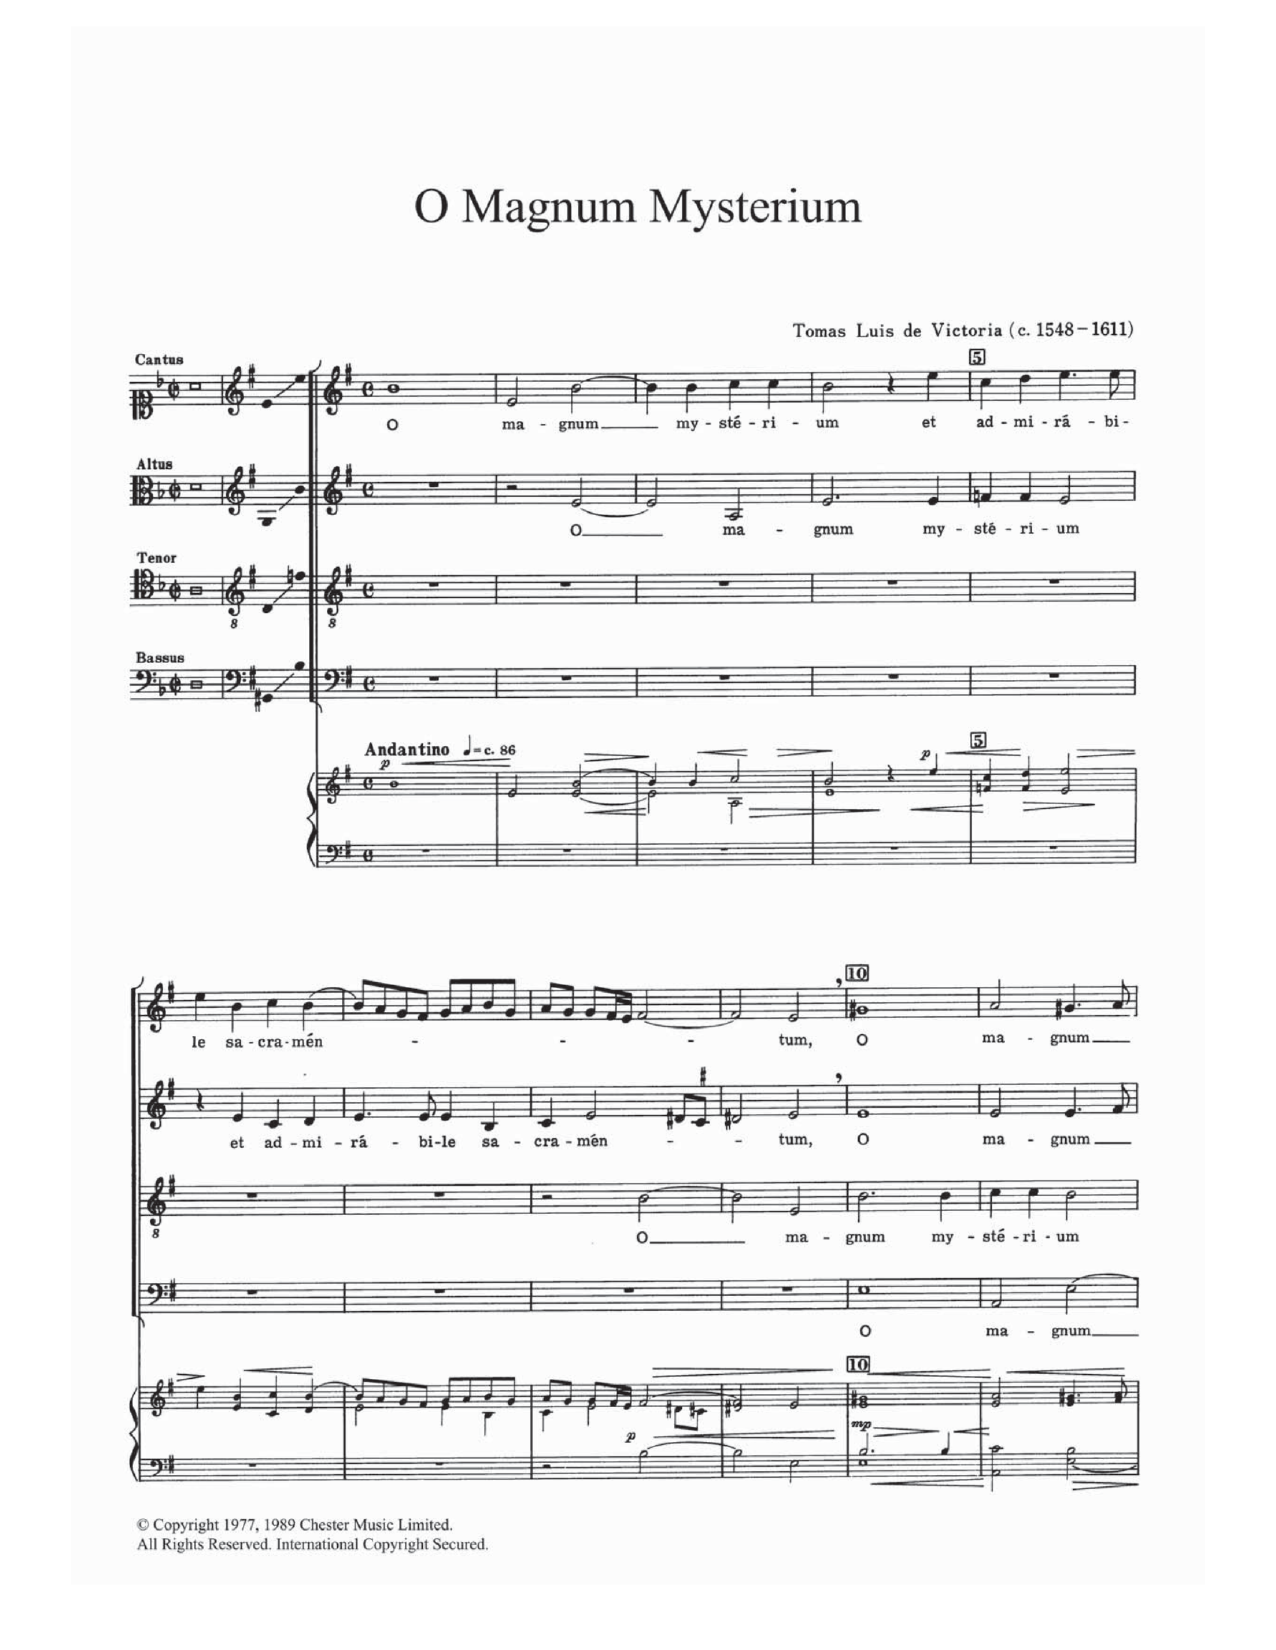 Tomas Luis De Victoria O Magnum Mysterium Sheet Music Notes & Chords for SATB - Download or Print PDF